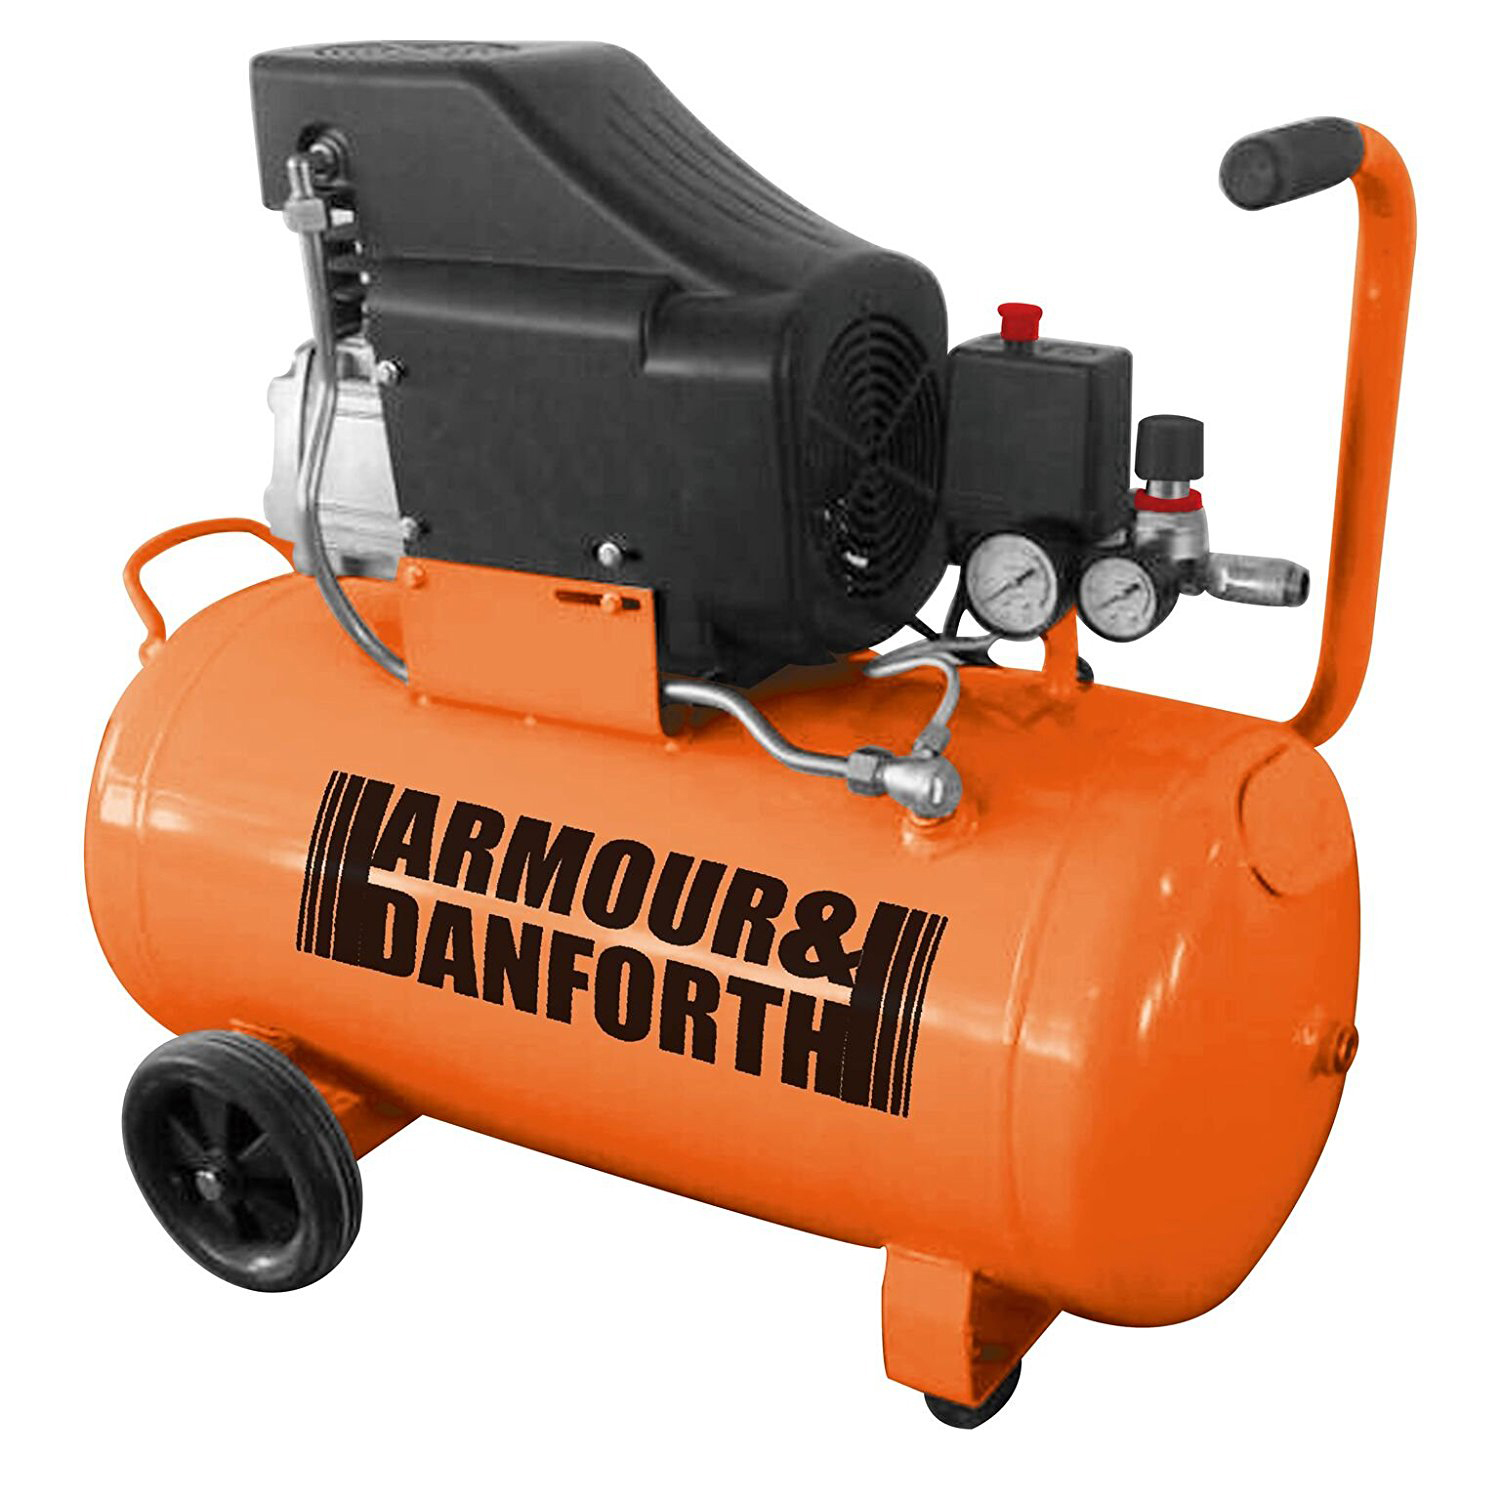 Compressore aria Armour and Danforth ad olio mod.50 1500W tmx028-2019 2,5hp 8bar